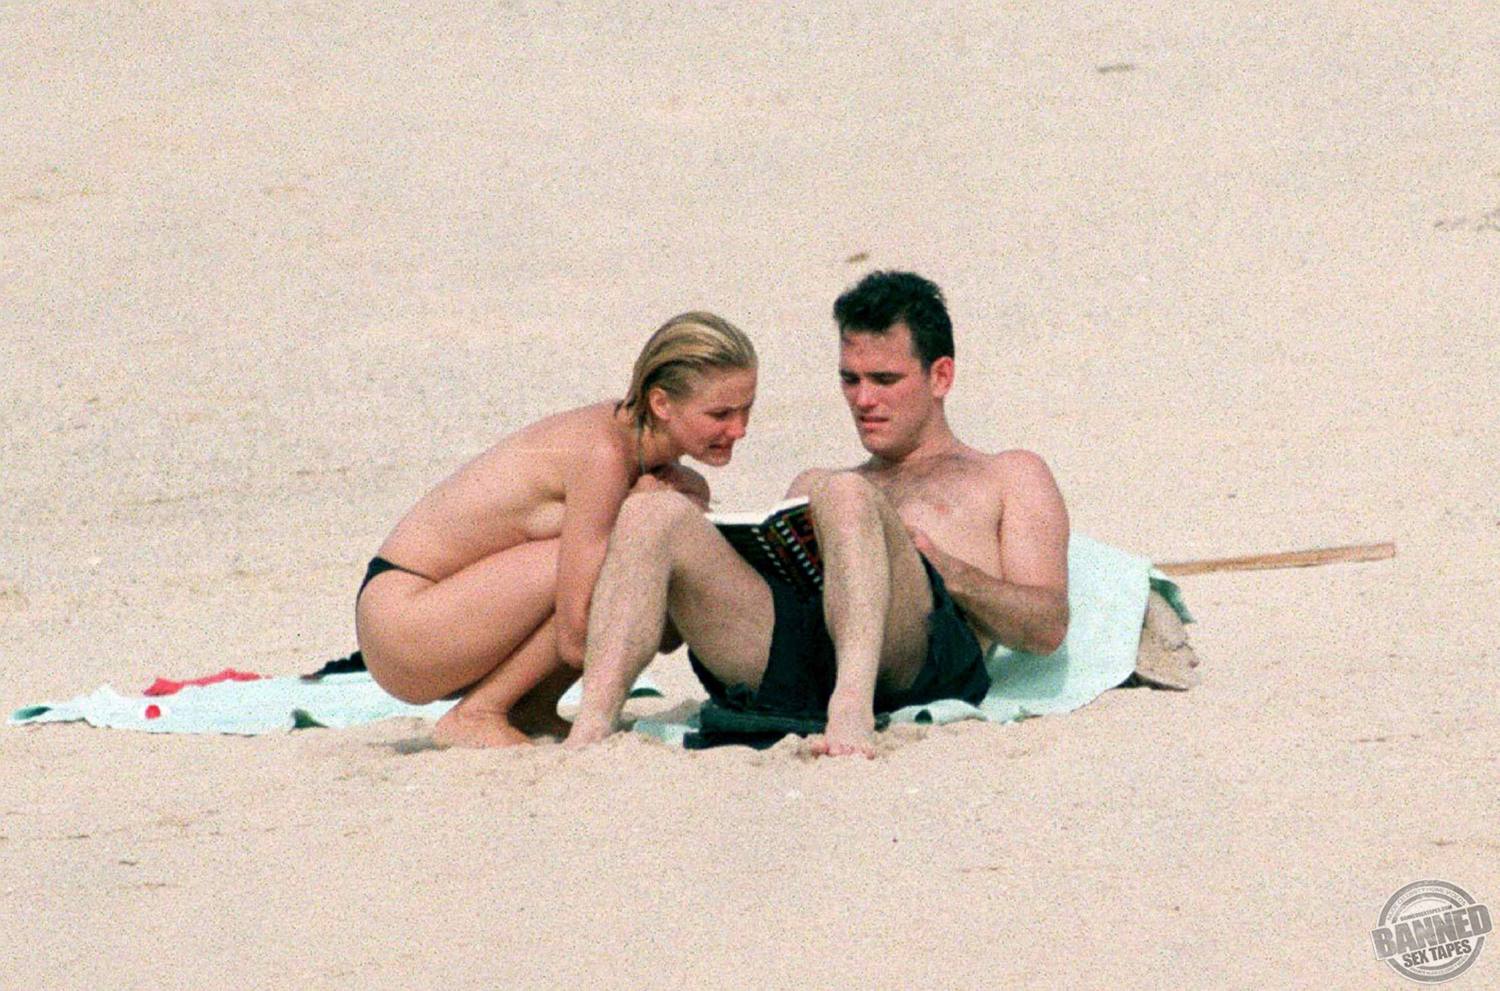 Best of Cameron diaz nude beach